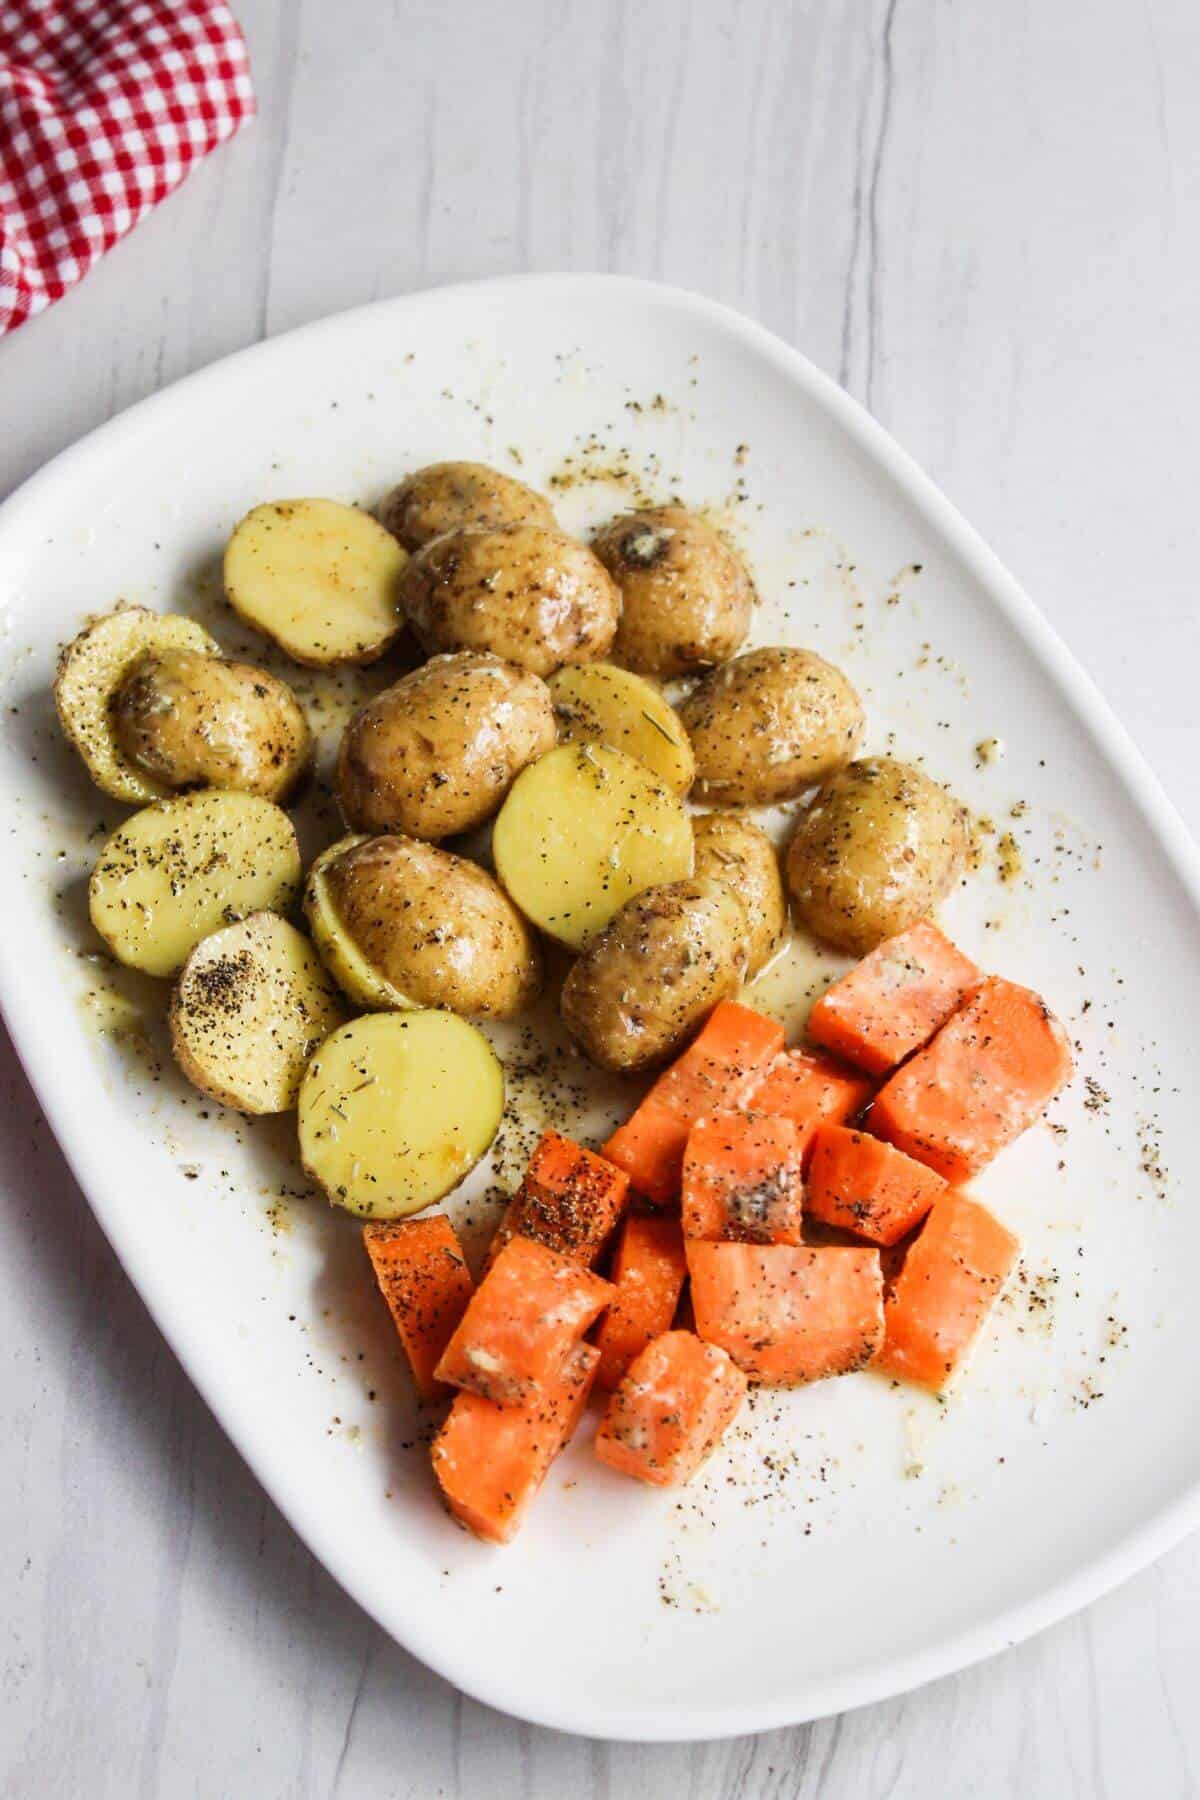 Seasoned potatoes and carrots on a white plate.